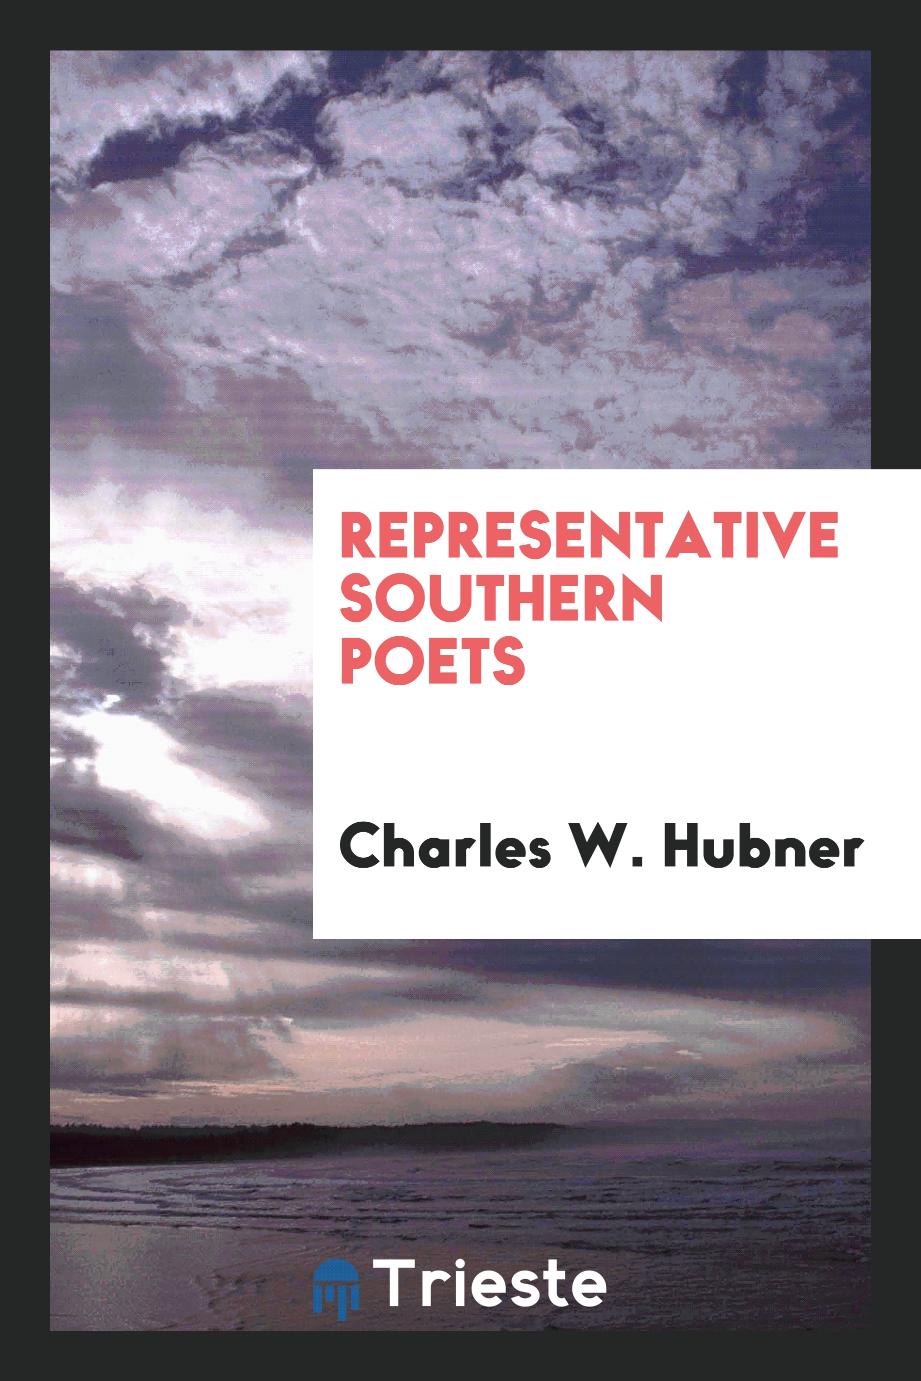 Representative southern poets